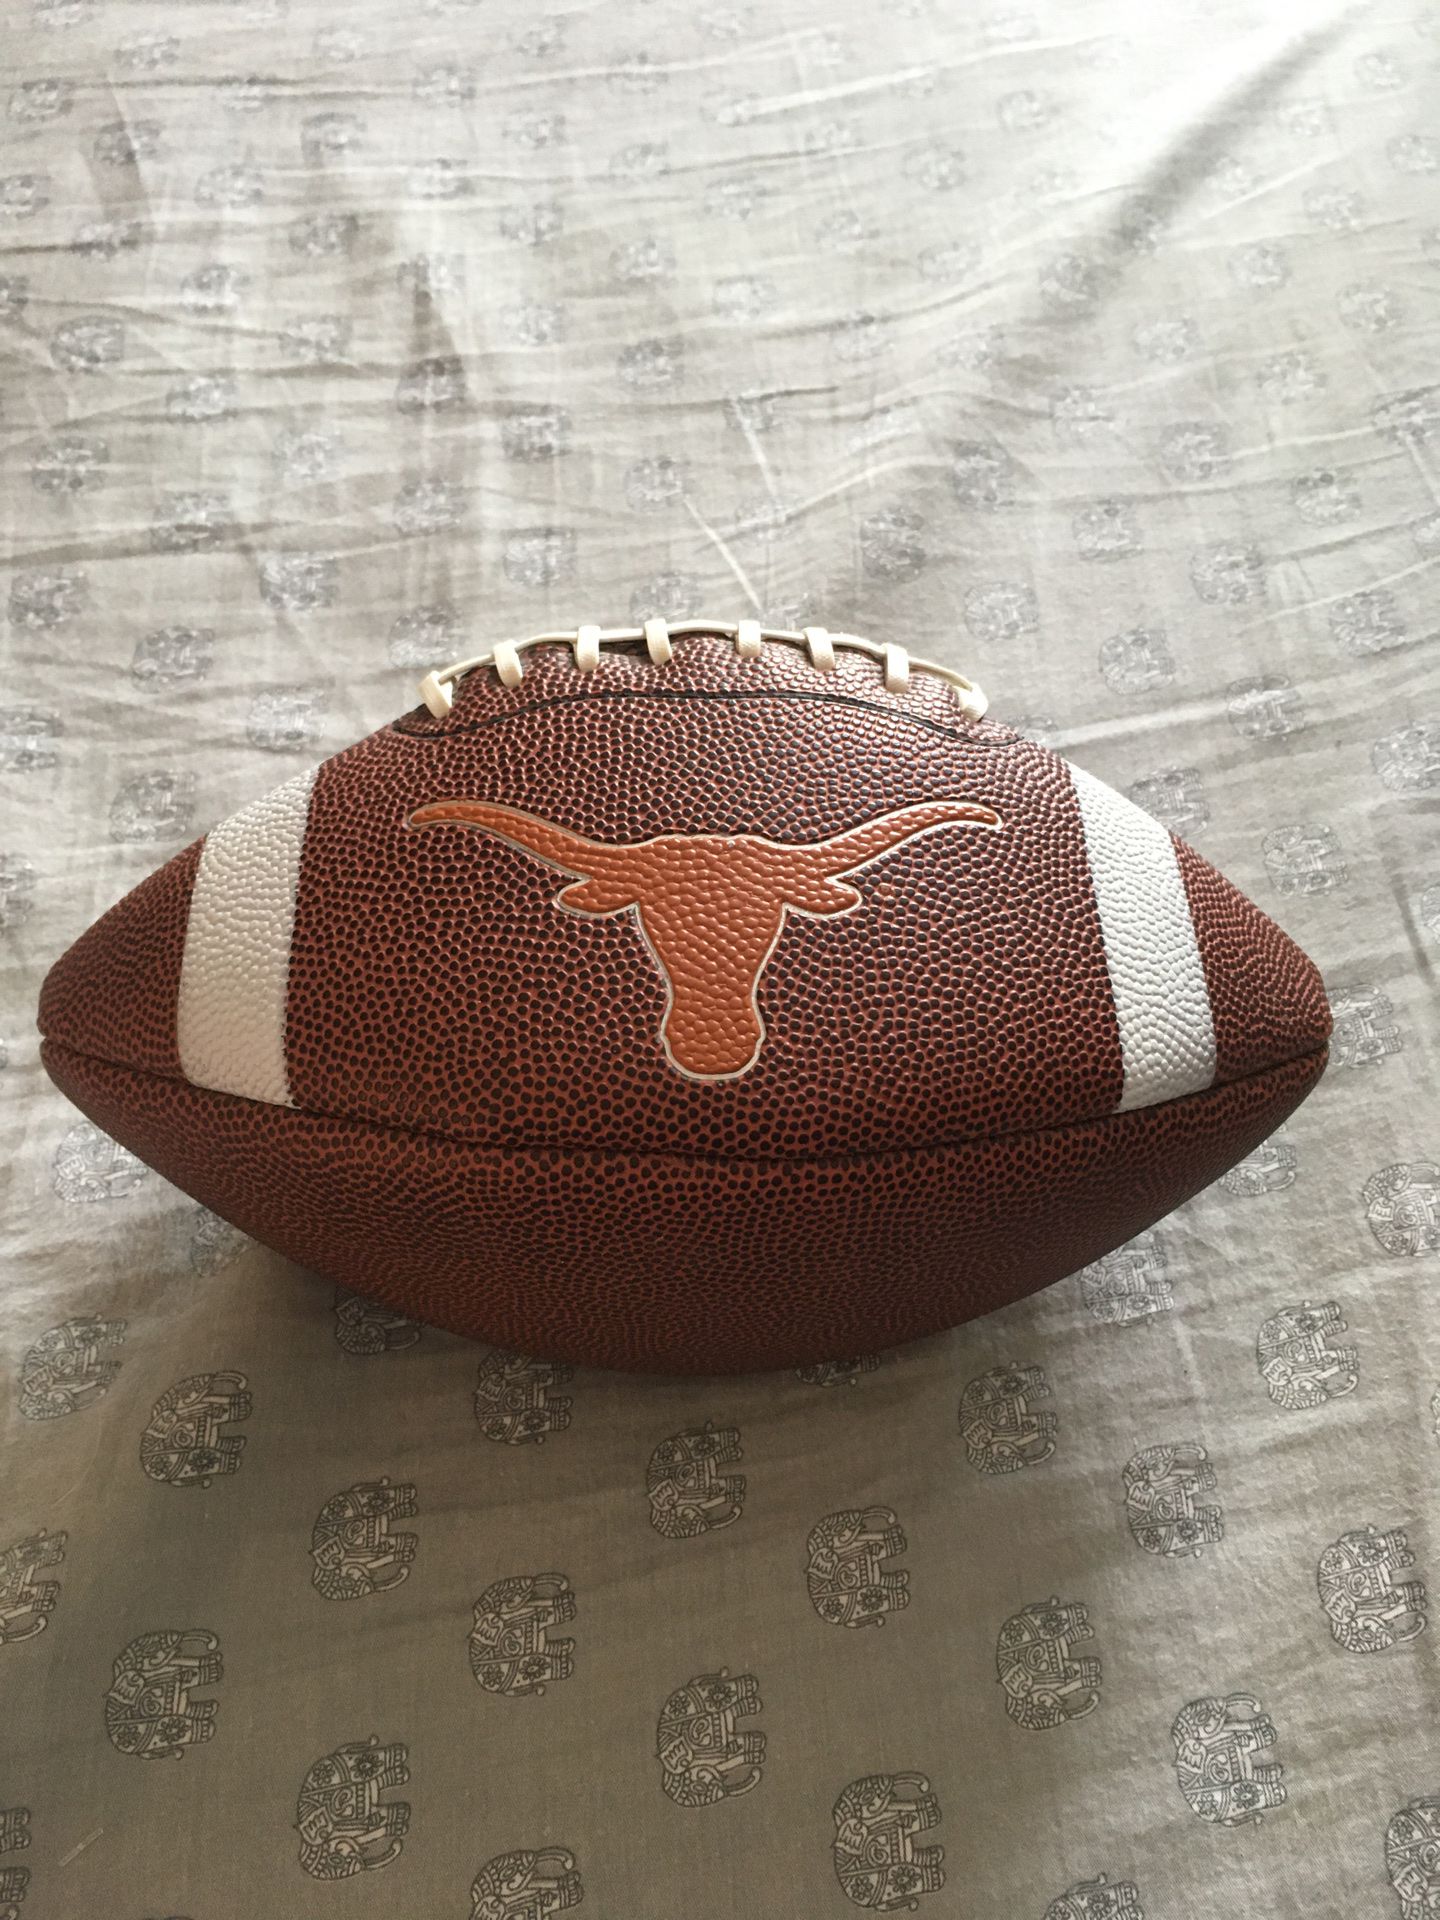 Texas Longhorns Football Full Size